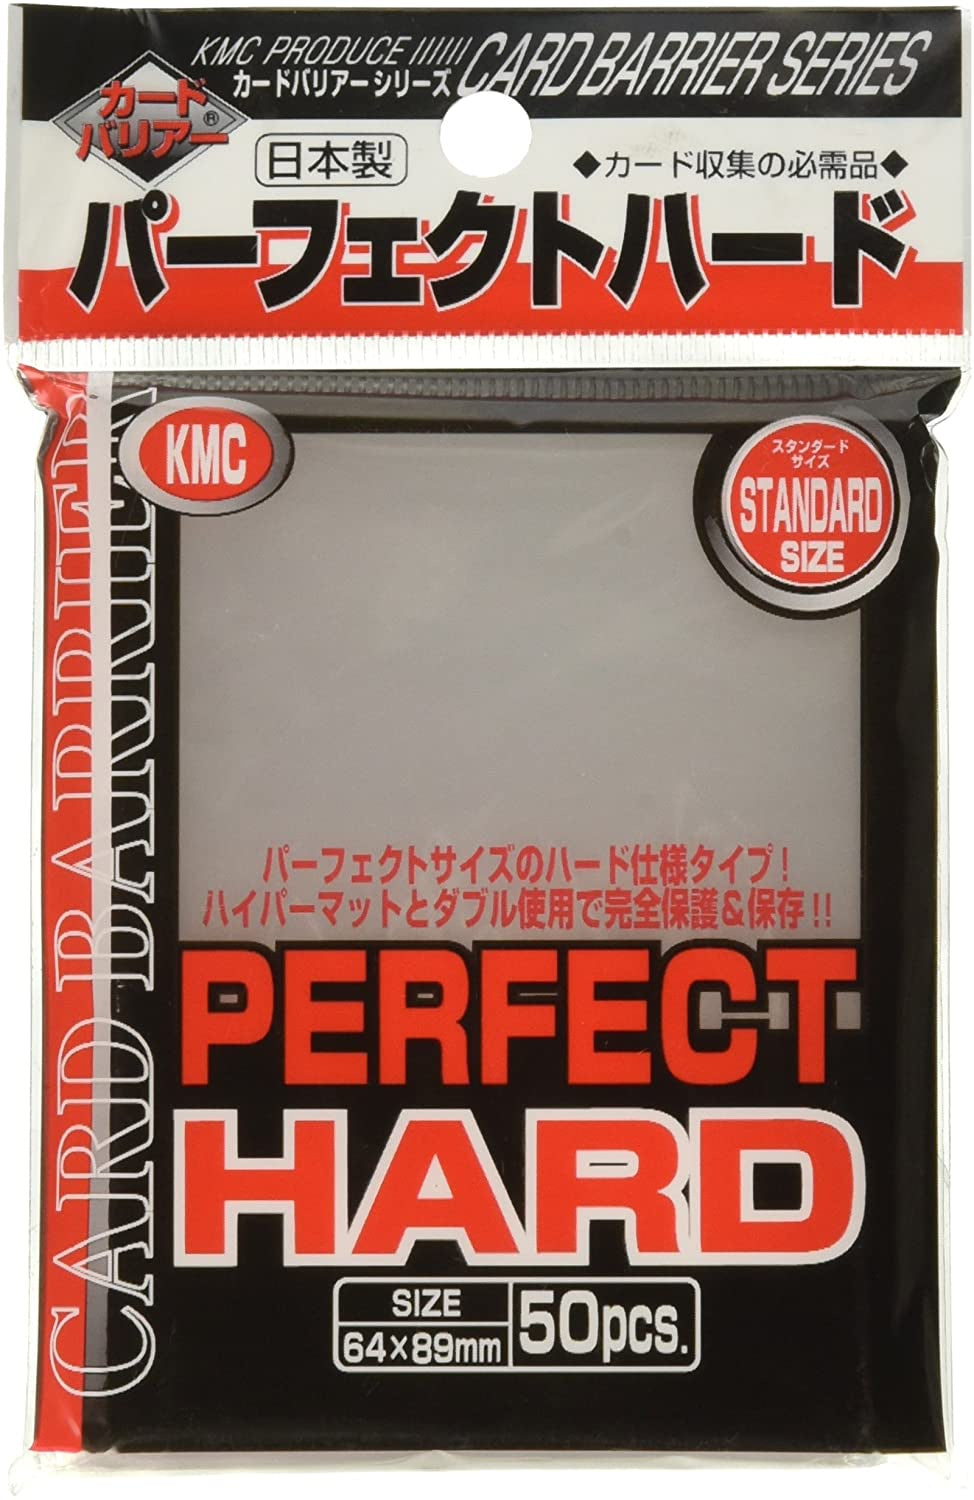 KMC Perfect Hard Card Barrier STANDARD SIZE 64x89mm 50pcs